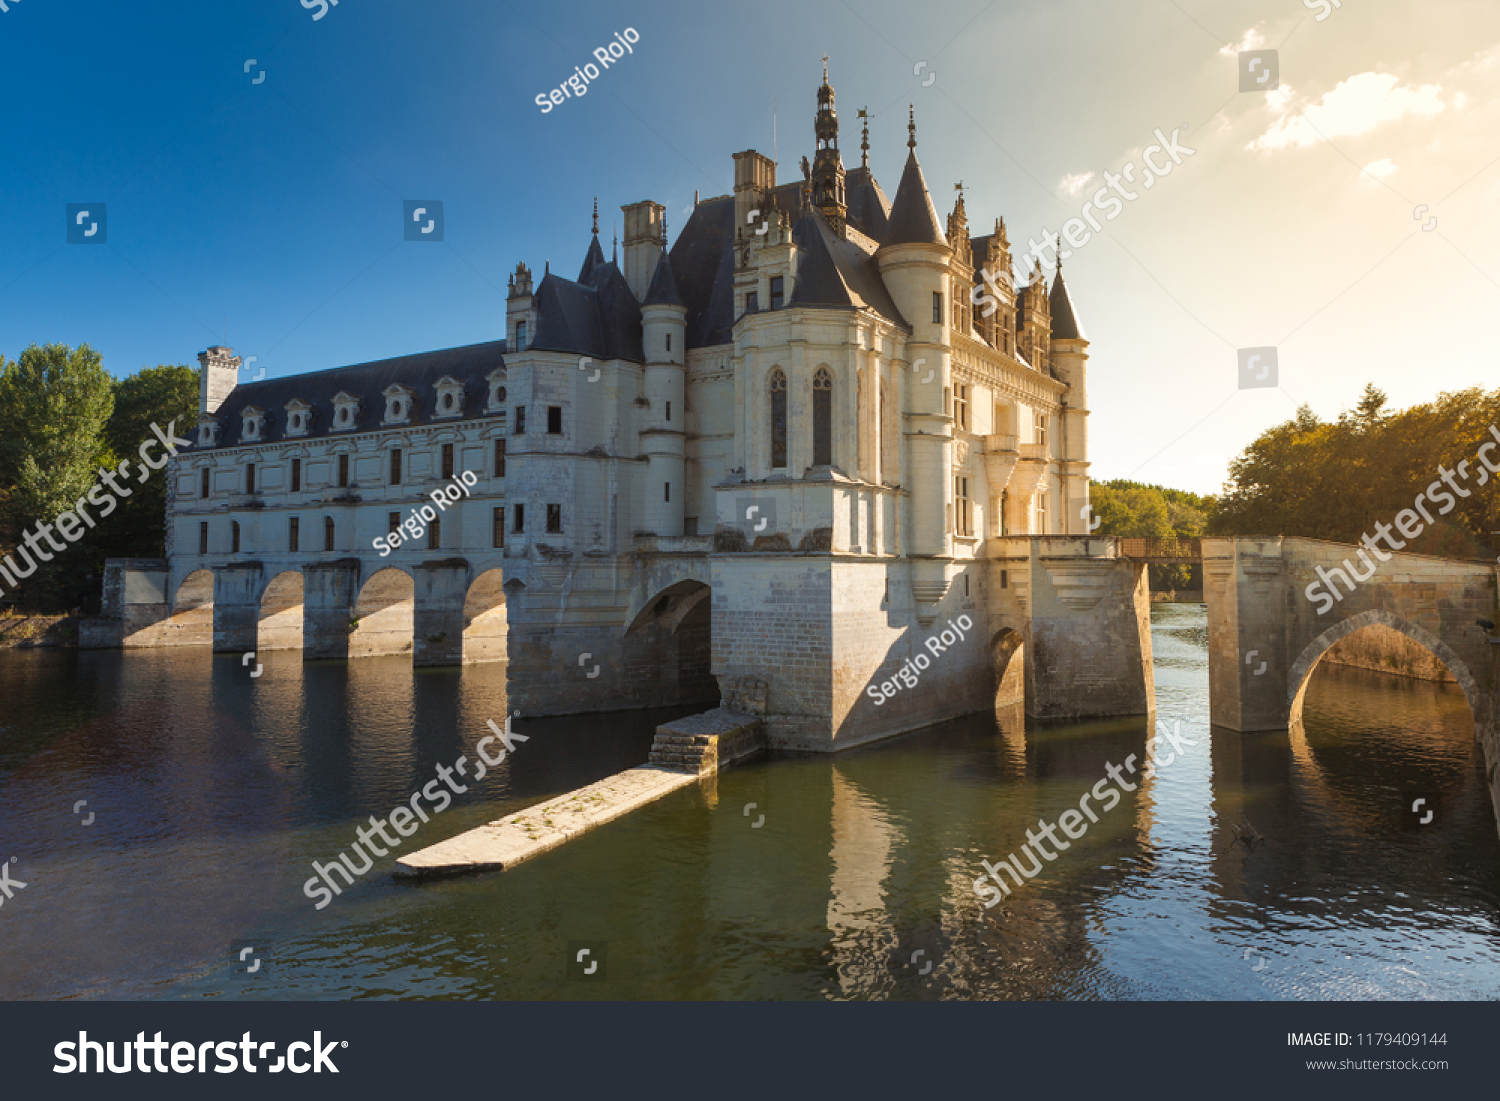 Chateau de Chenonceau. France. Chateau of the Loire Valley. #1179409144